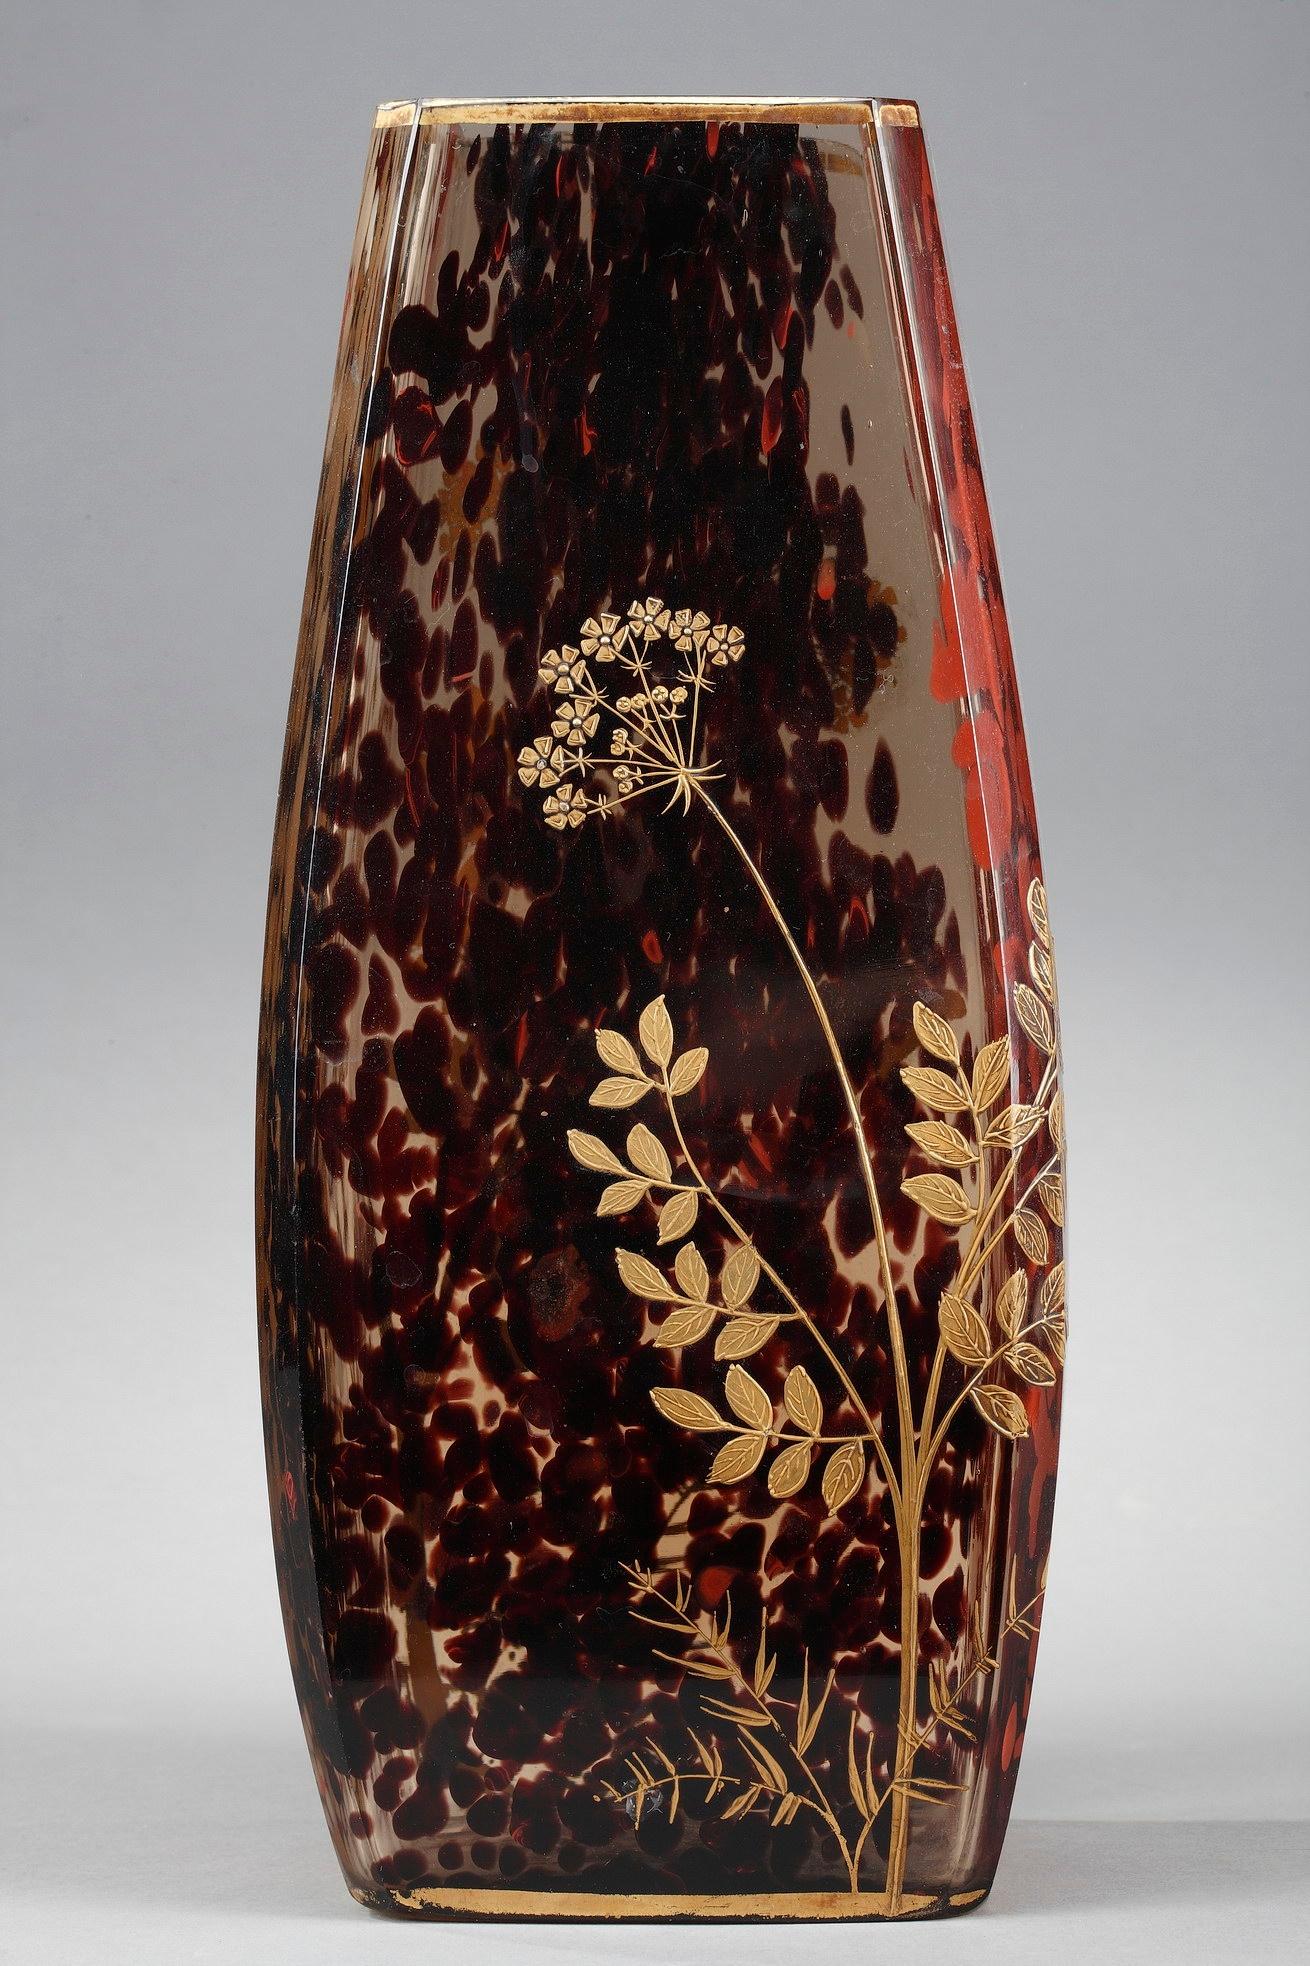 French Art Nouveau Speckled Glass Vase Attributed to Ernest Léveillé For Sale